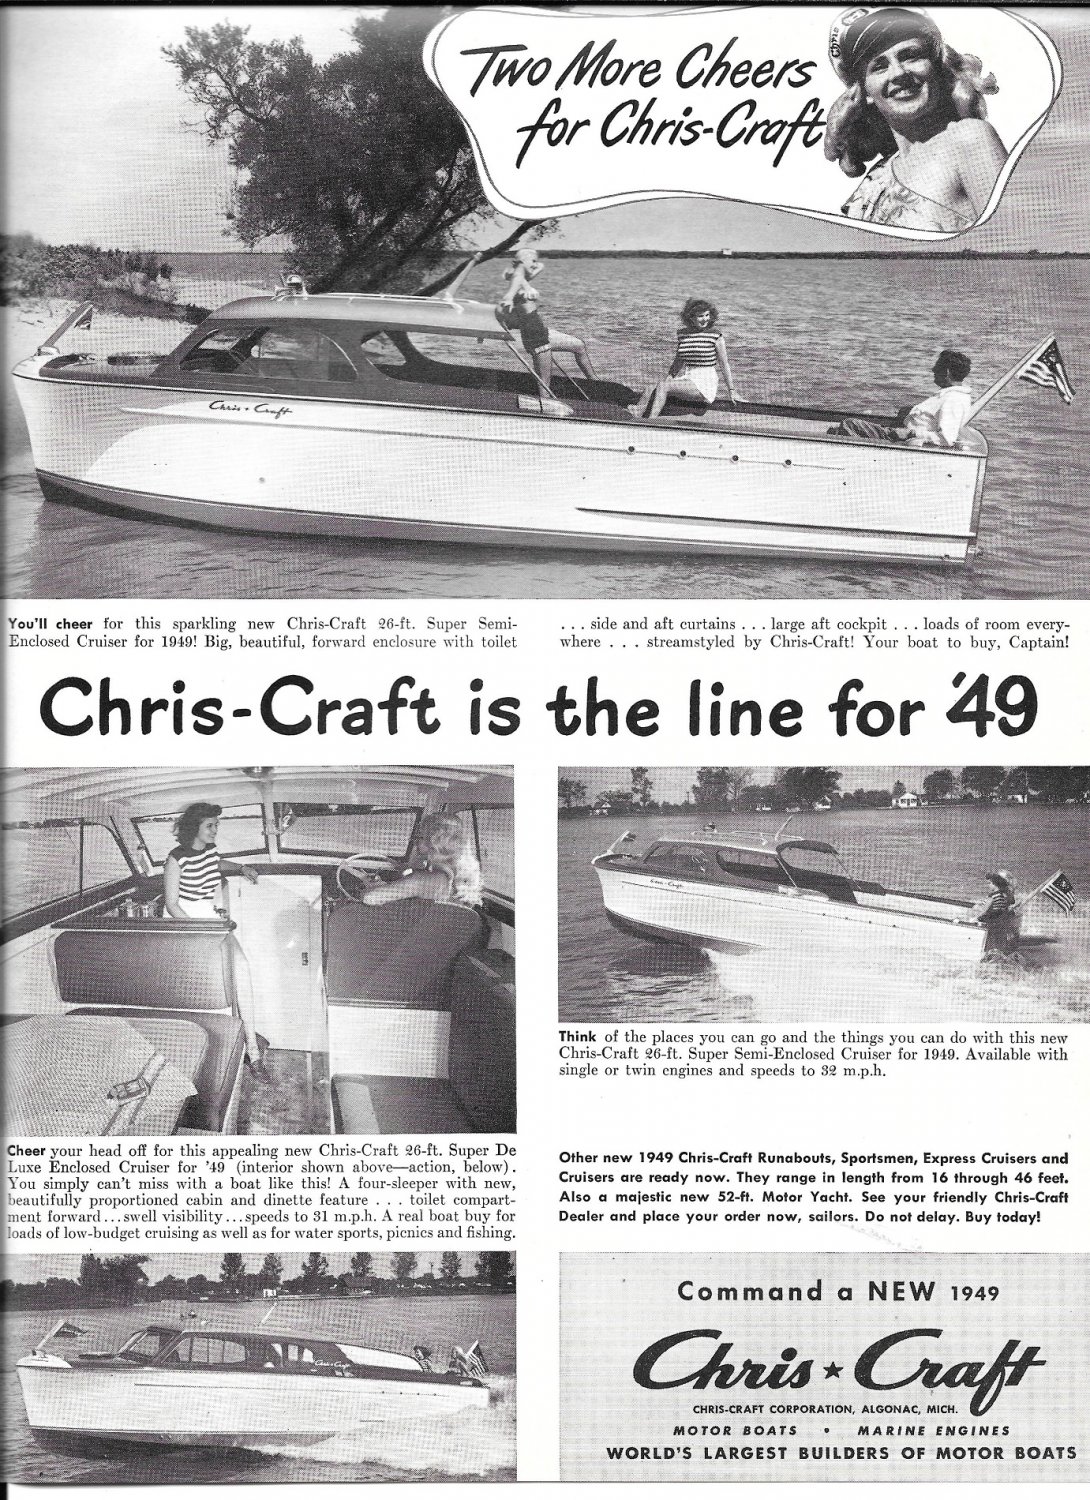 1949 Chris- Craft oats Ad- Nice Photos of 26' Super Semi- Enclosed